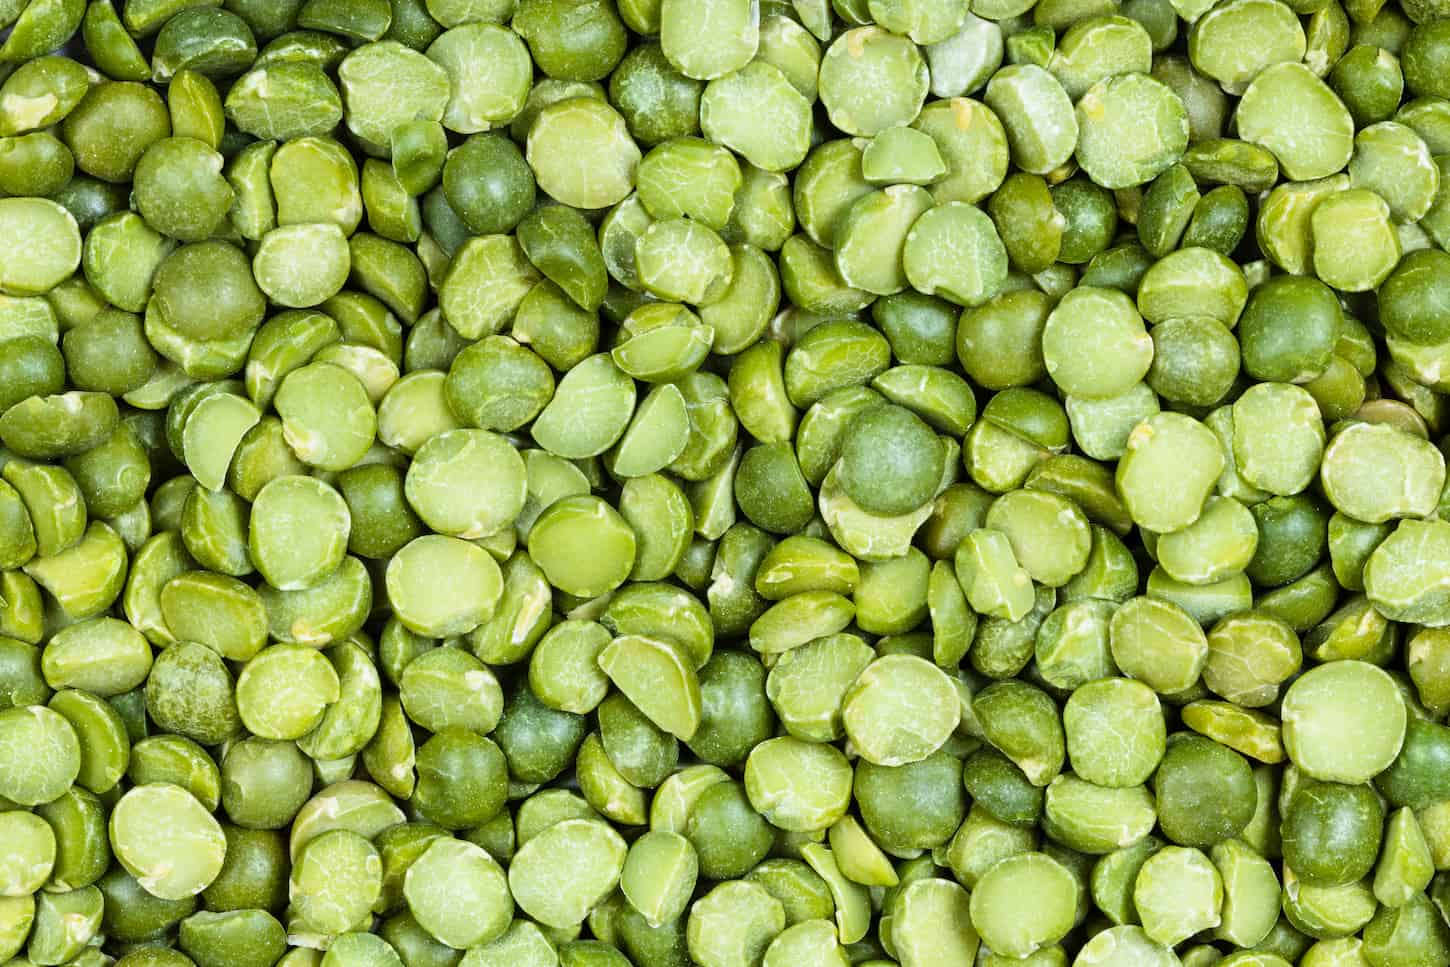 An image of raw dried green split peas.